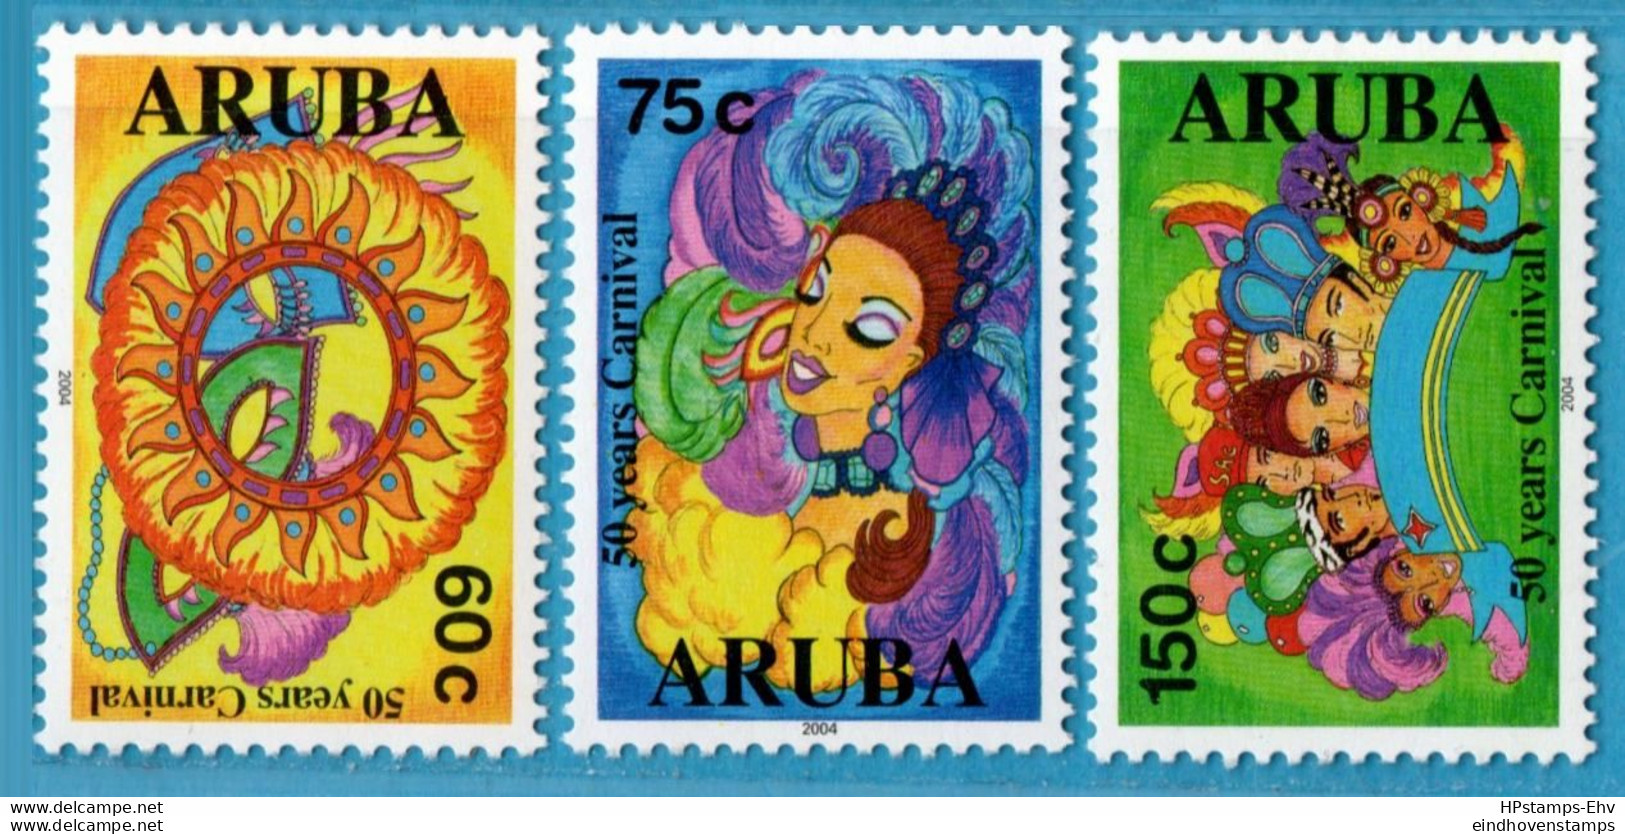 Aruba 2004 Carnavale 3 Values 04-01 MNH Masks, Costumes - Carnevale